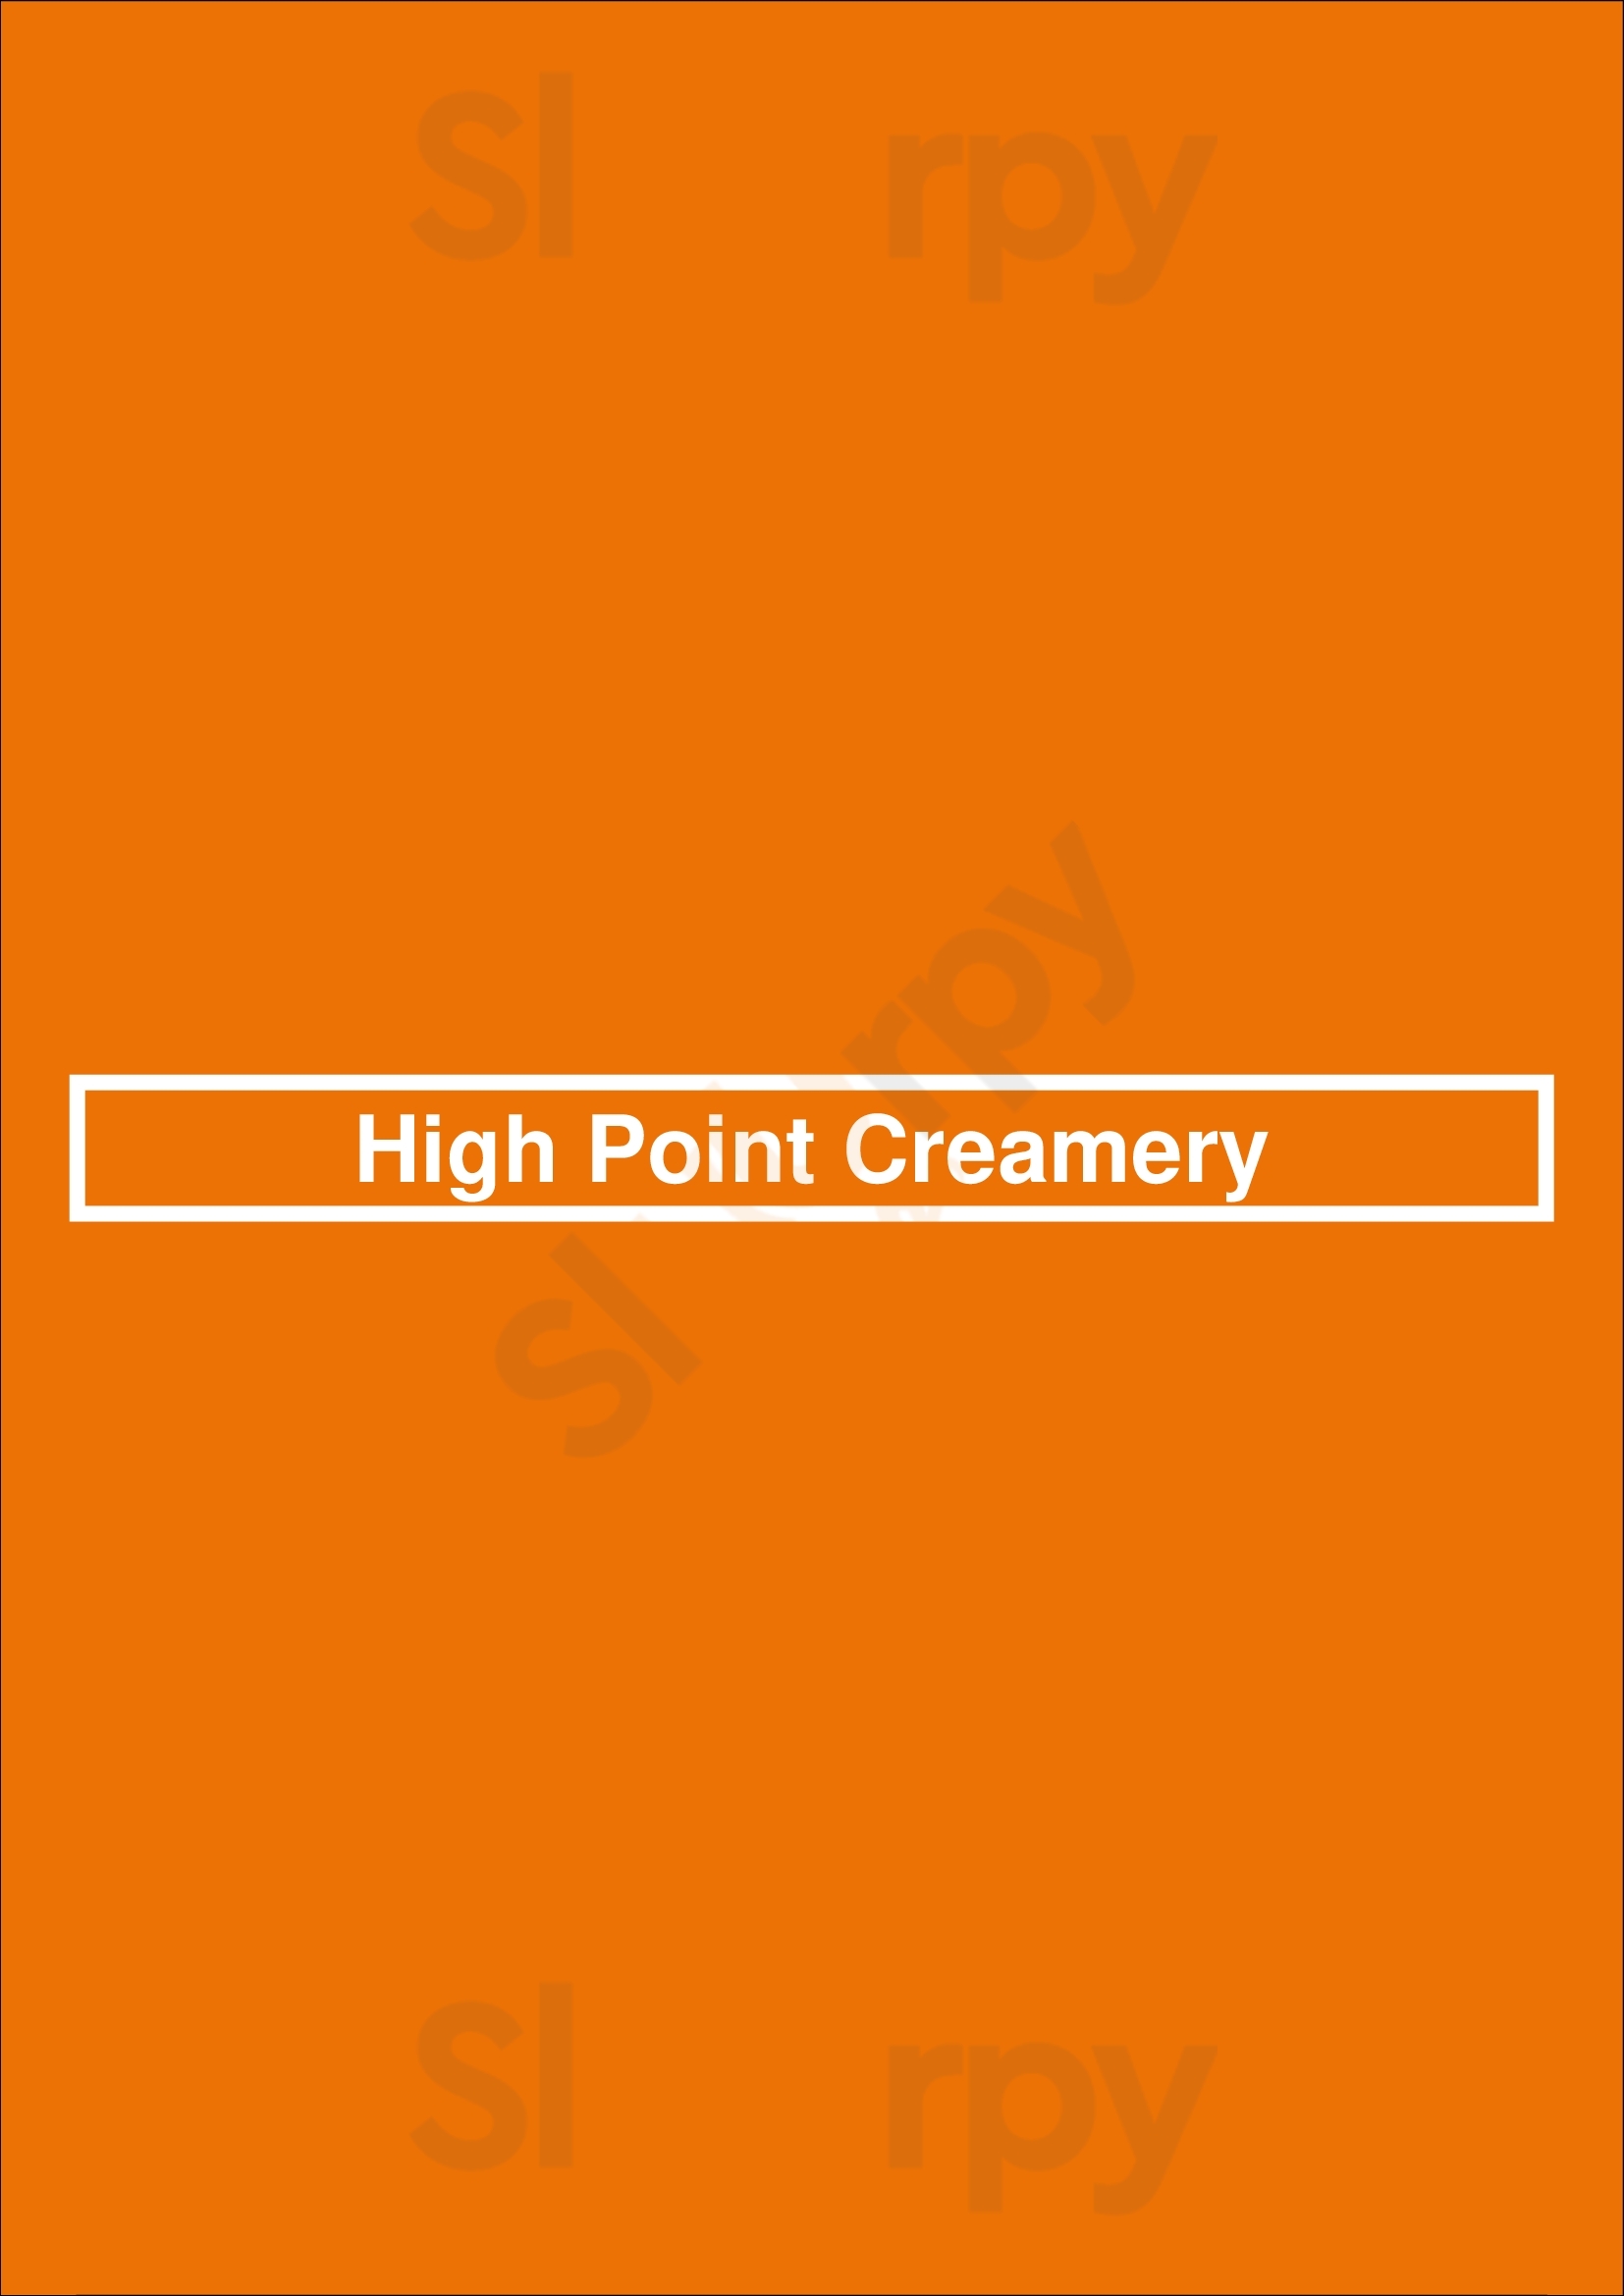 High Point Creamery Denver Menu - 1